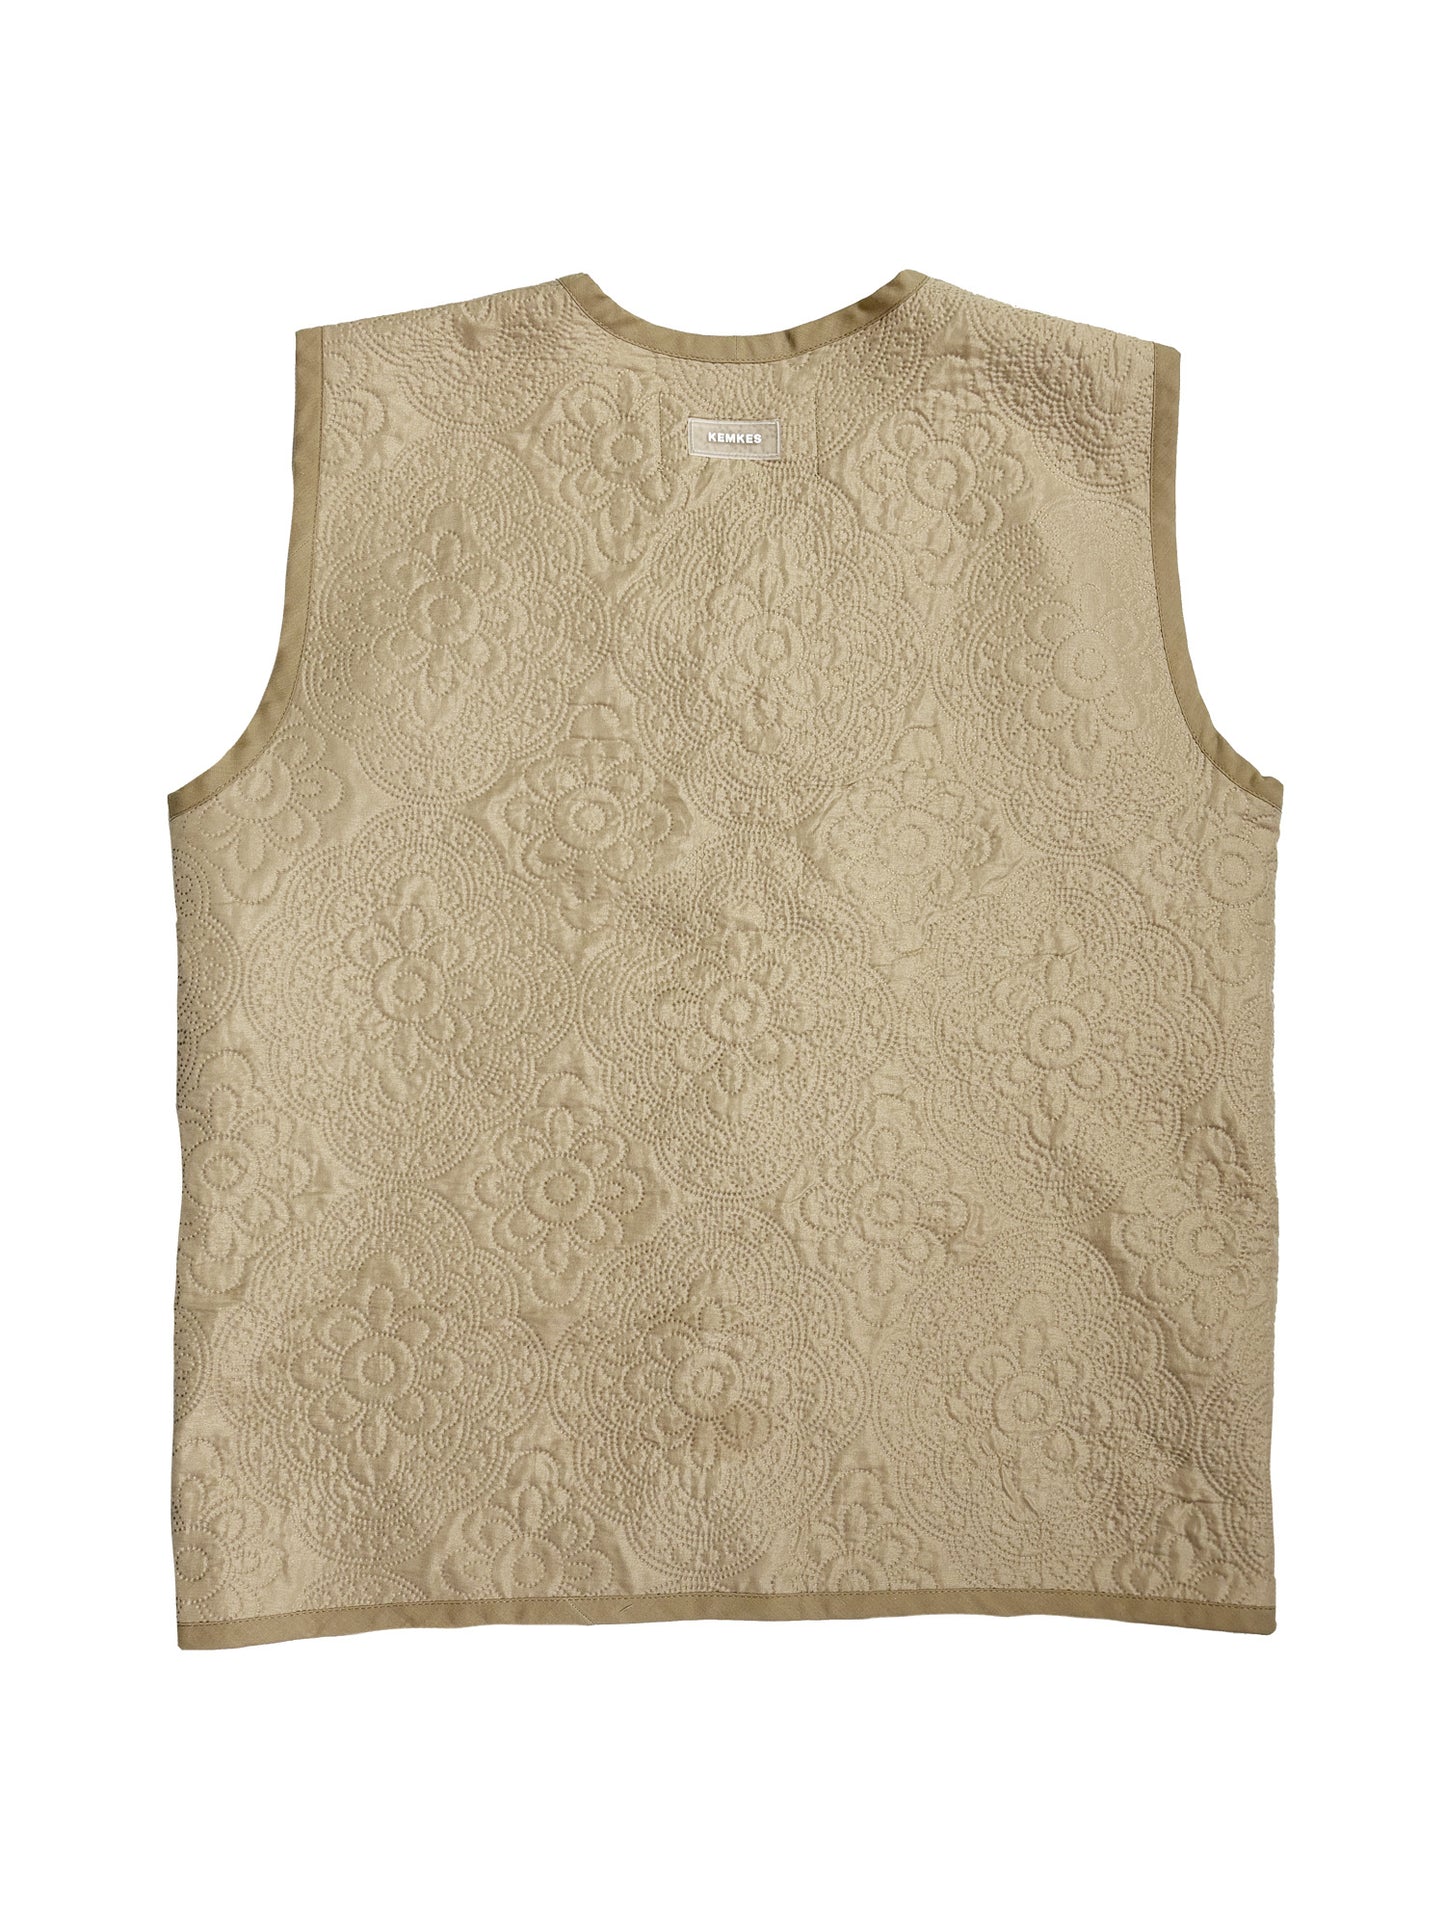 Bodywarmer sand quilt